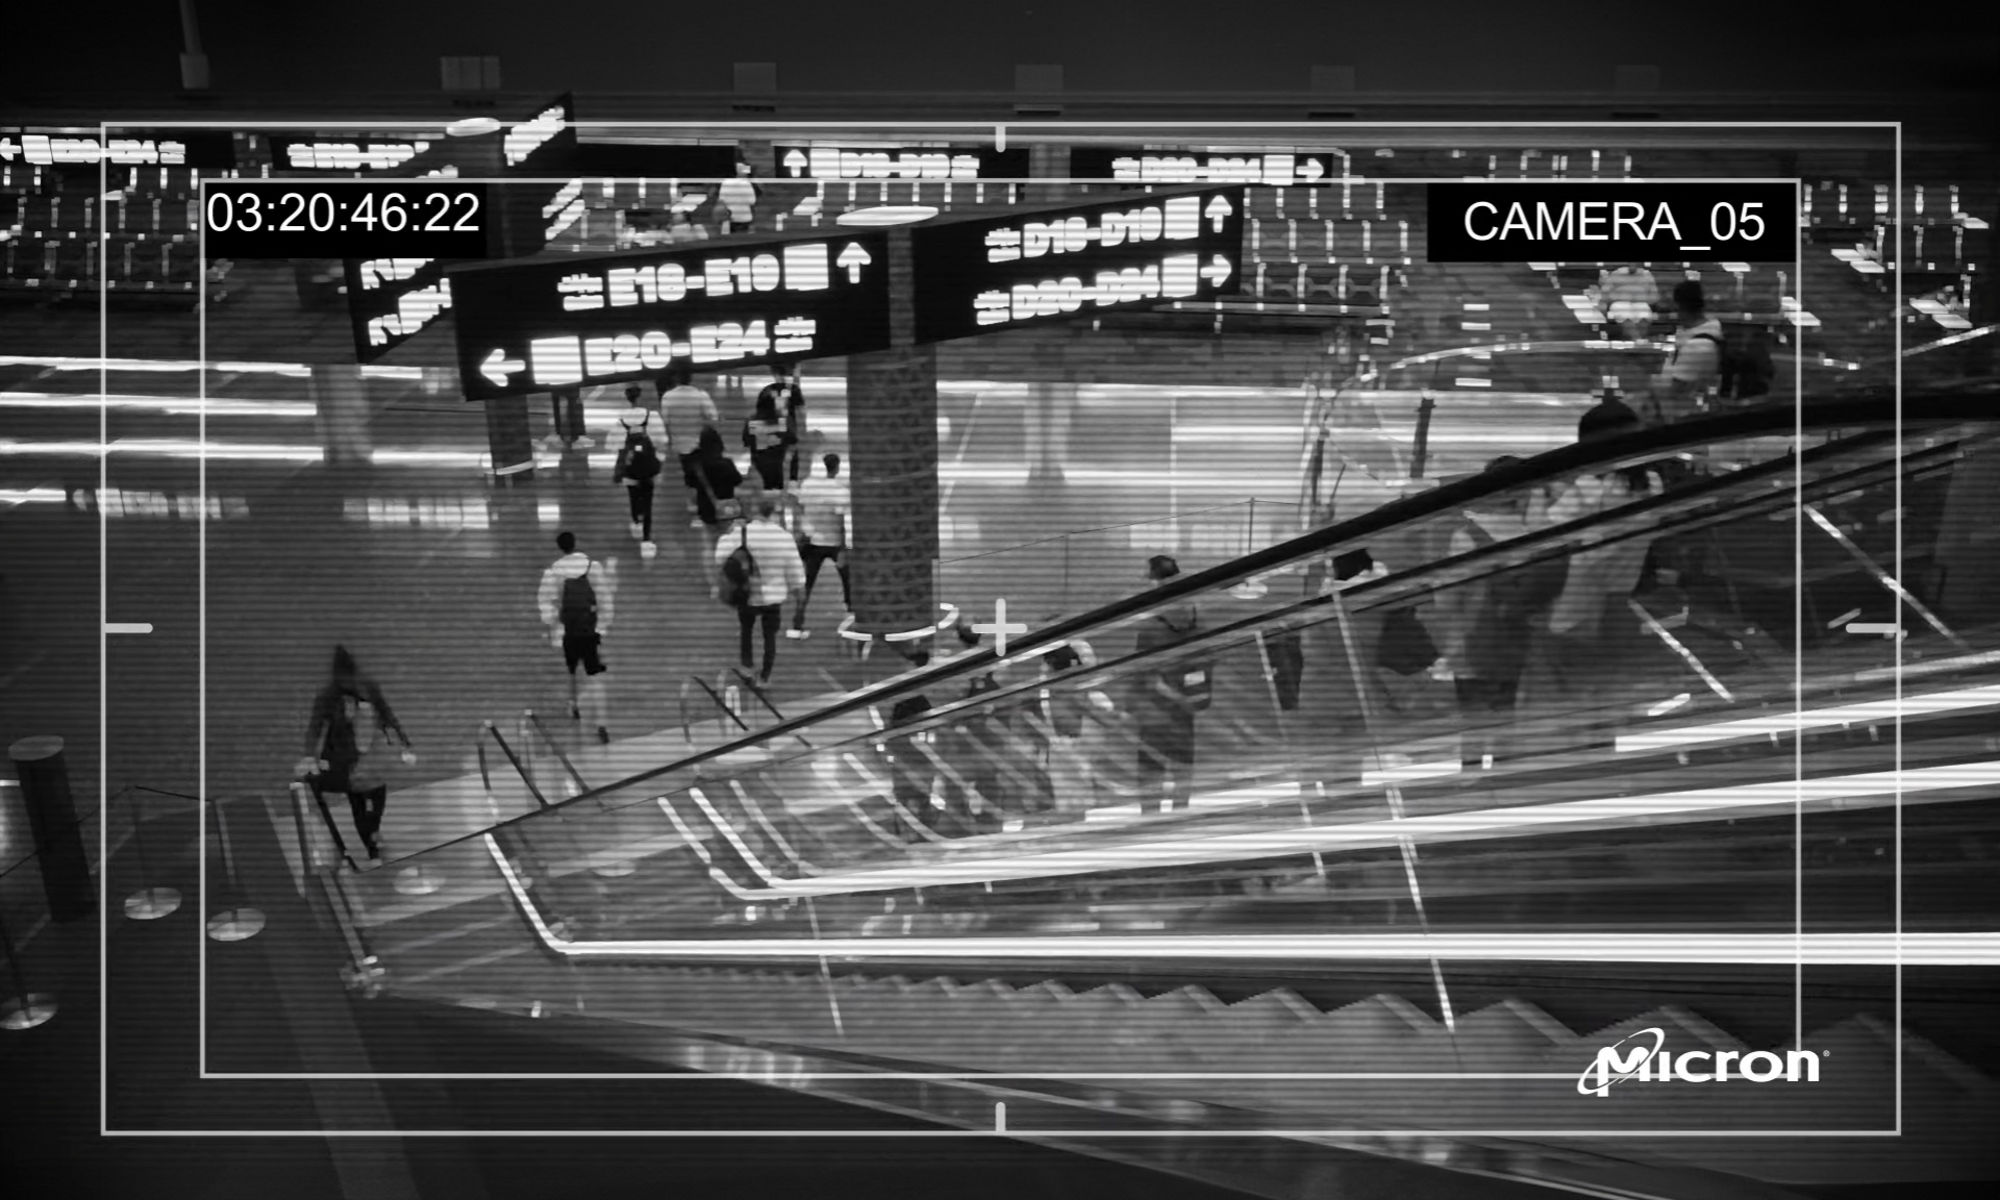 black and white surveillance camera image of shopping mall escalator 